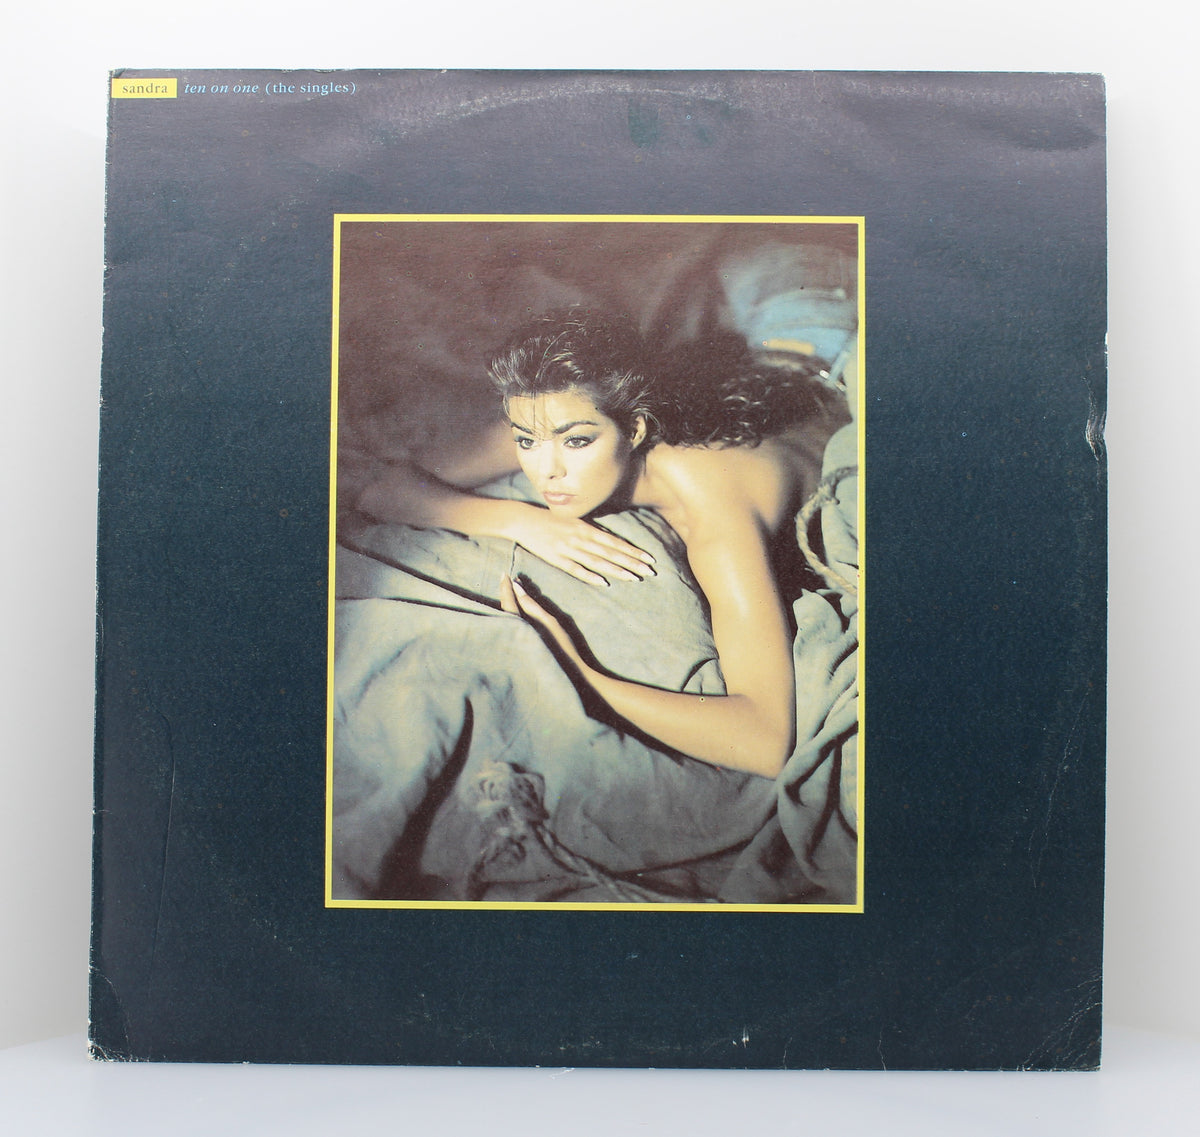 Sandra – Ten On One (The Singles) / Десет В Една, Vinyl, LP, Compilation, Bulgaria 1989